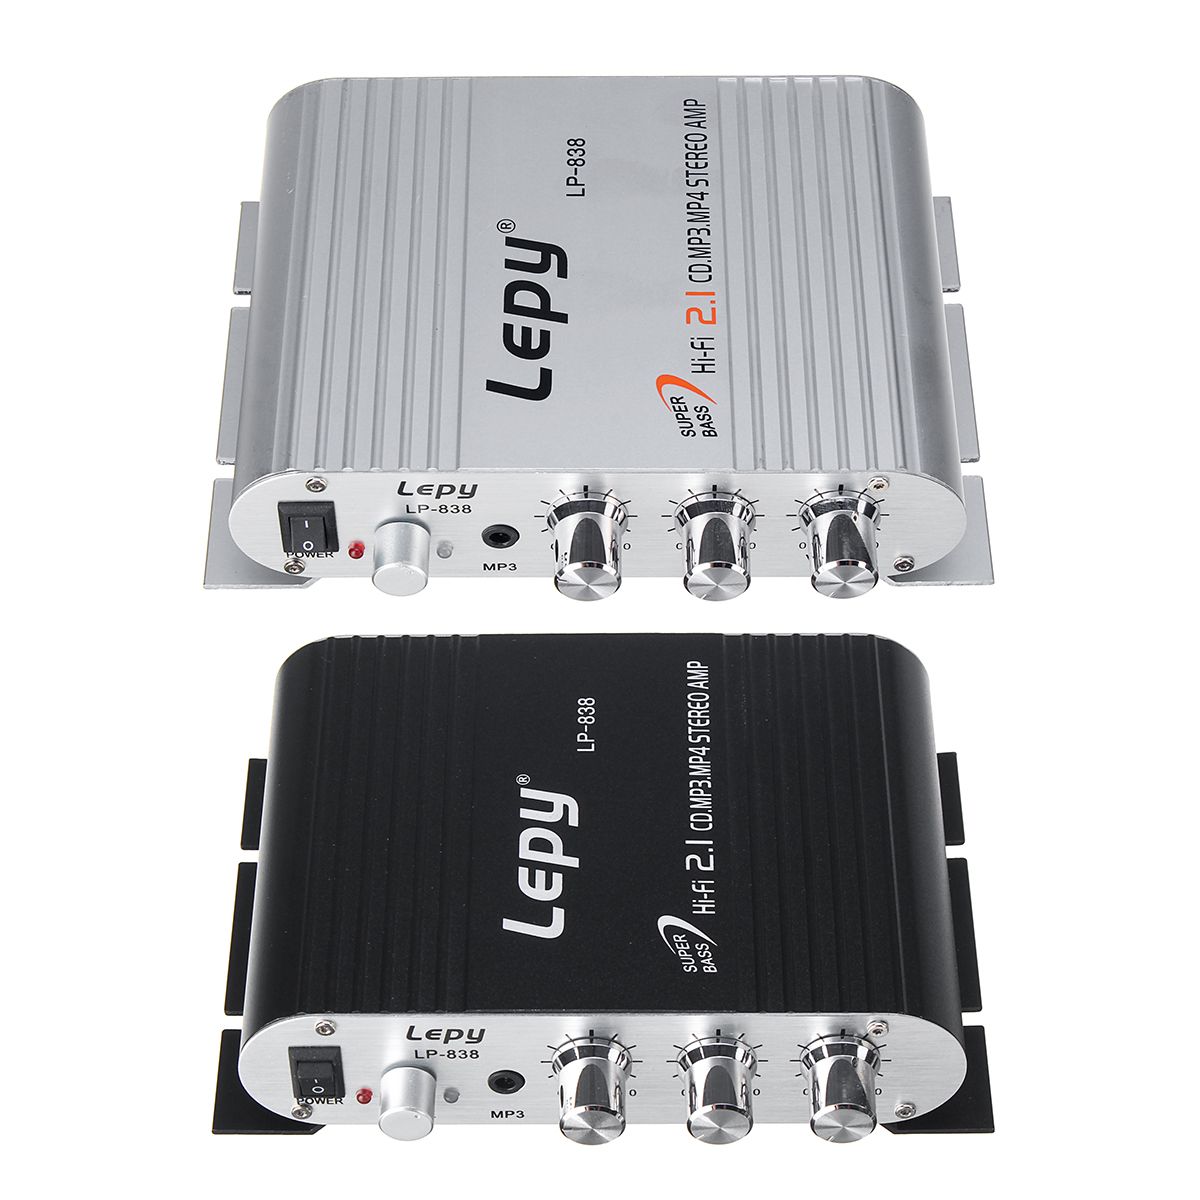 LEPY-LP-838-21CH-2x15W20W-HIFI-Lossless-Power-Amplifier-1634381